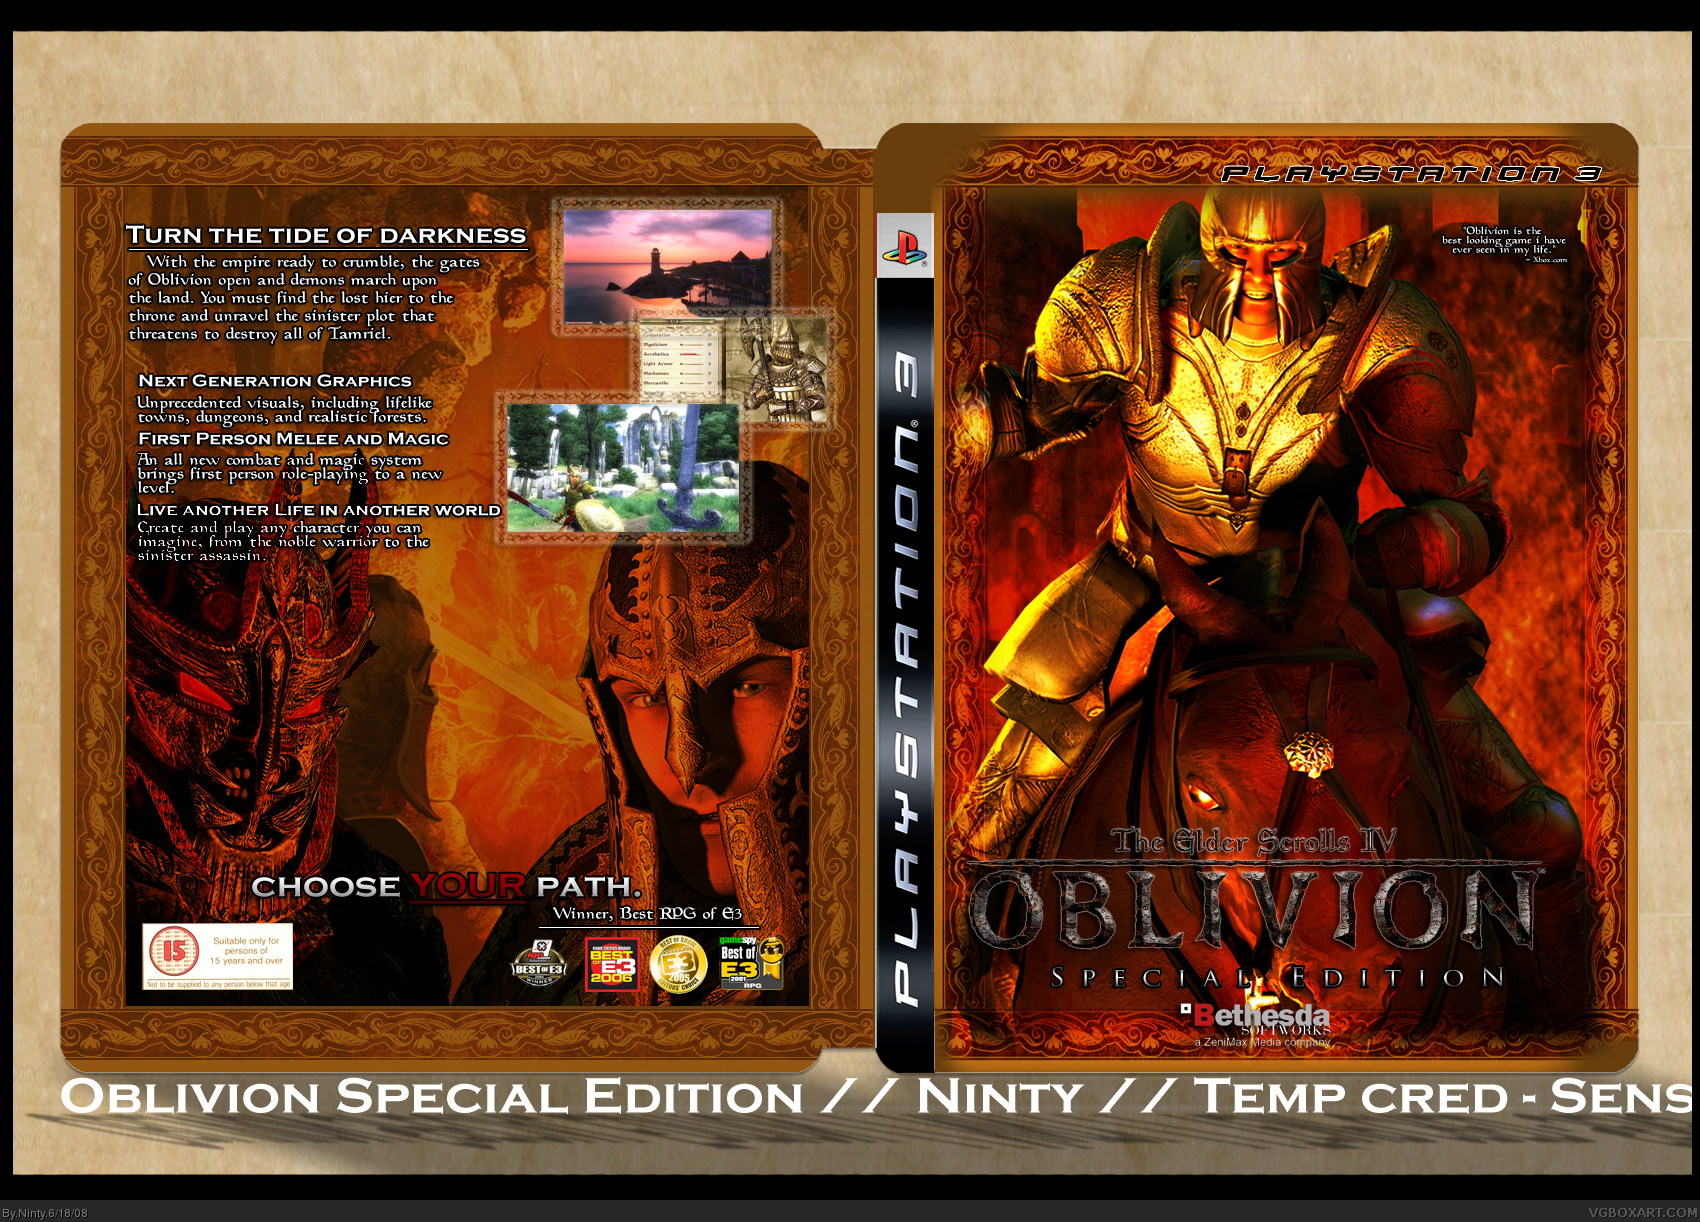 The Elder Scrolls: Oblivion Special Edition box cover